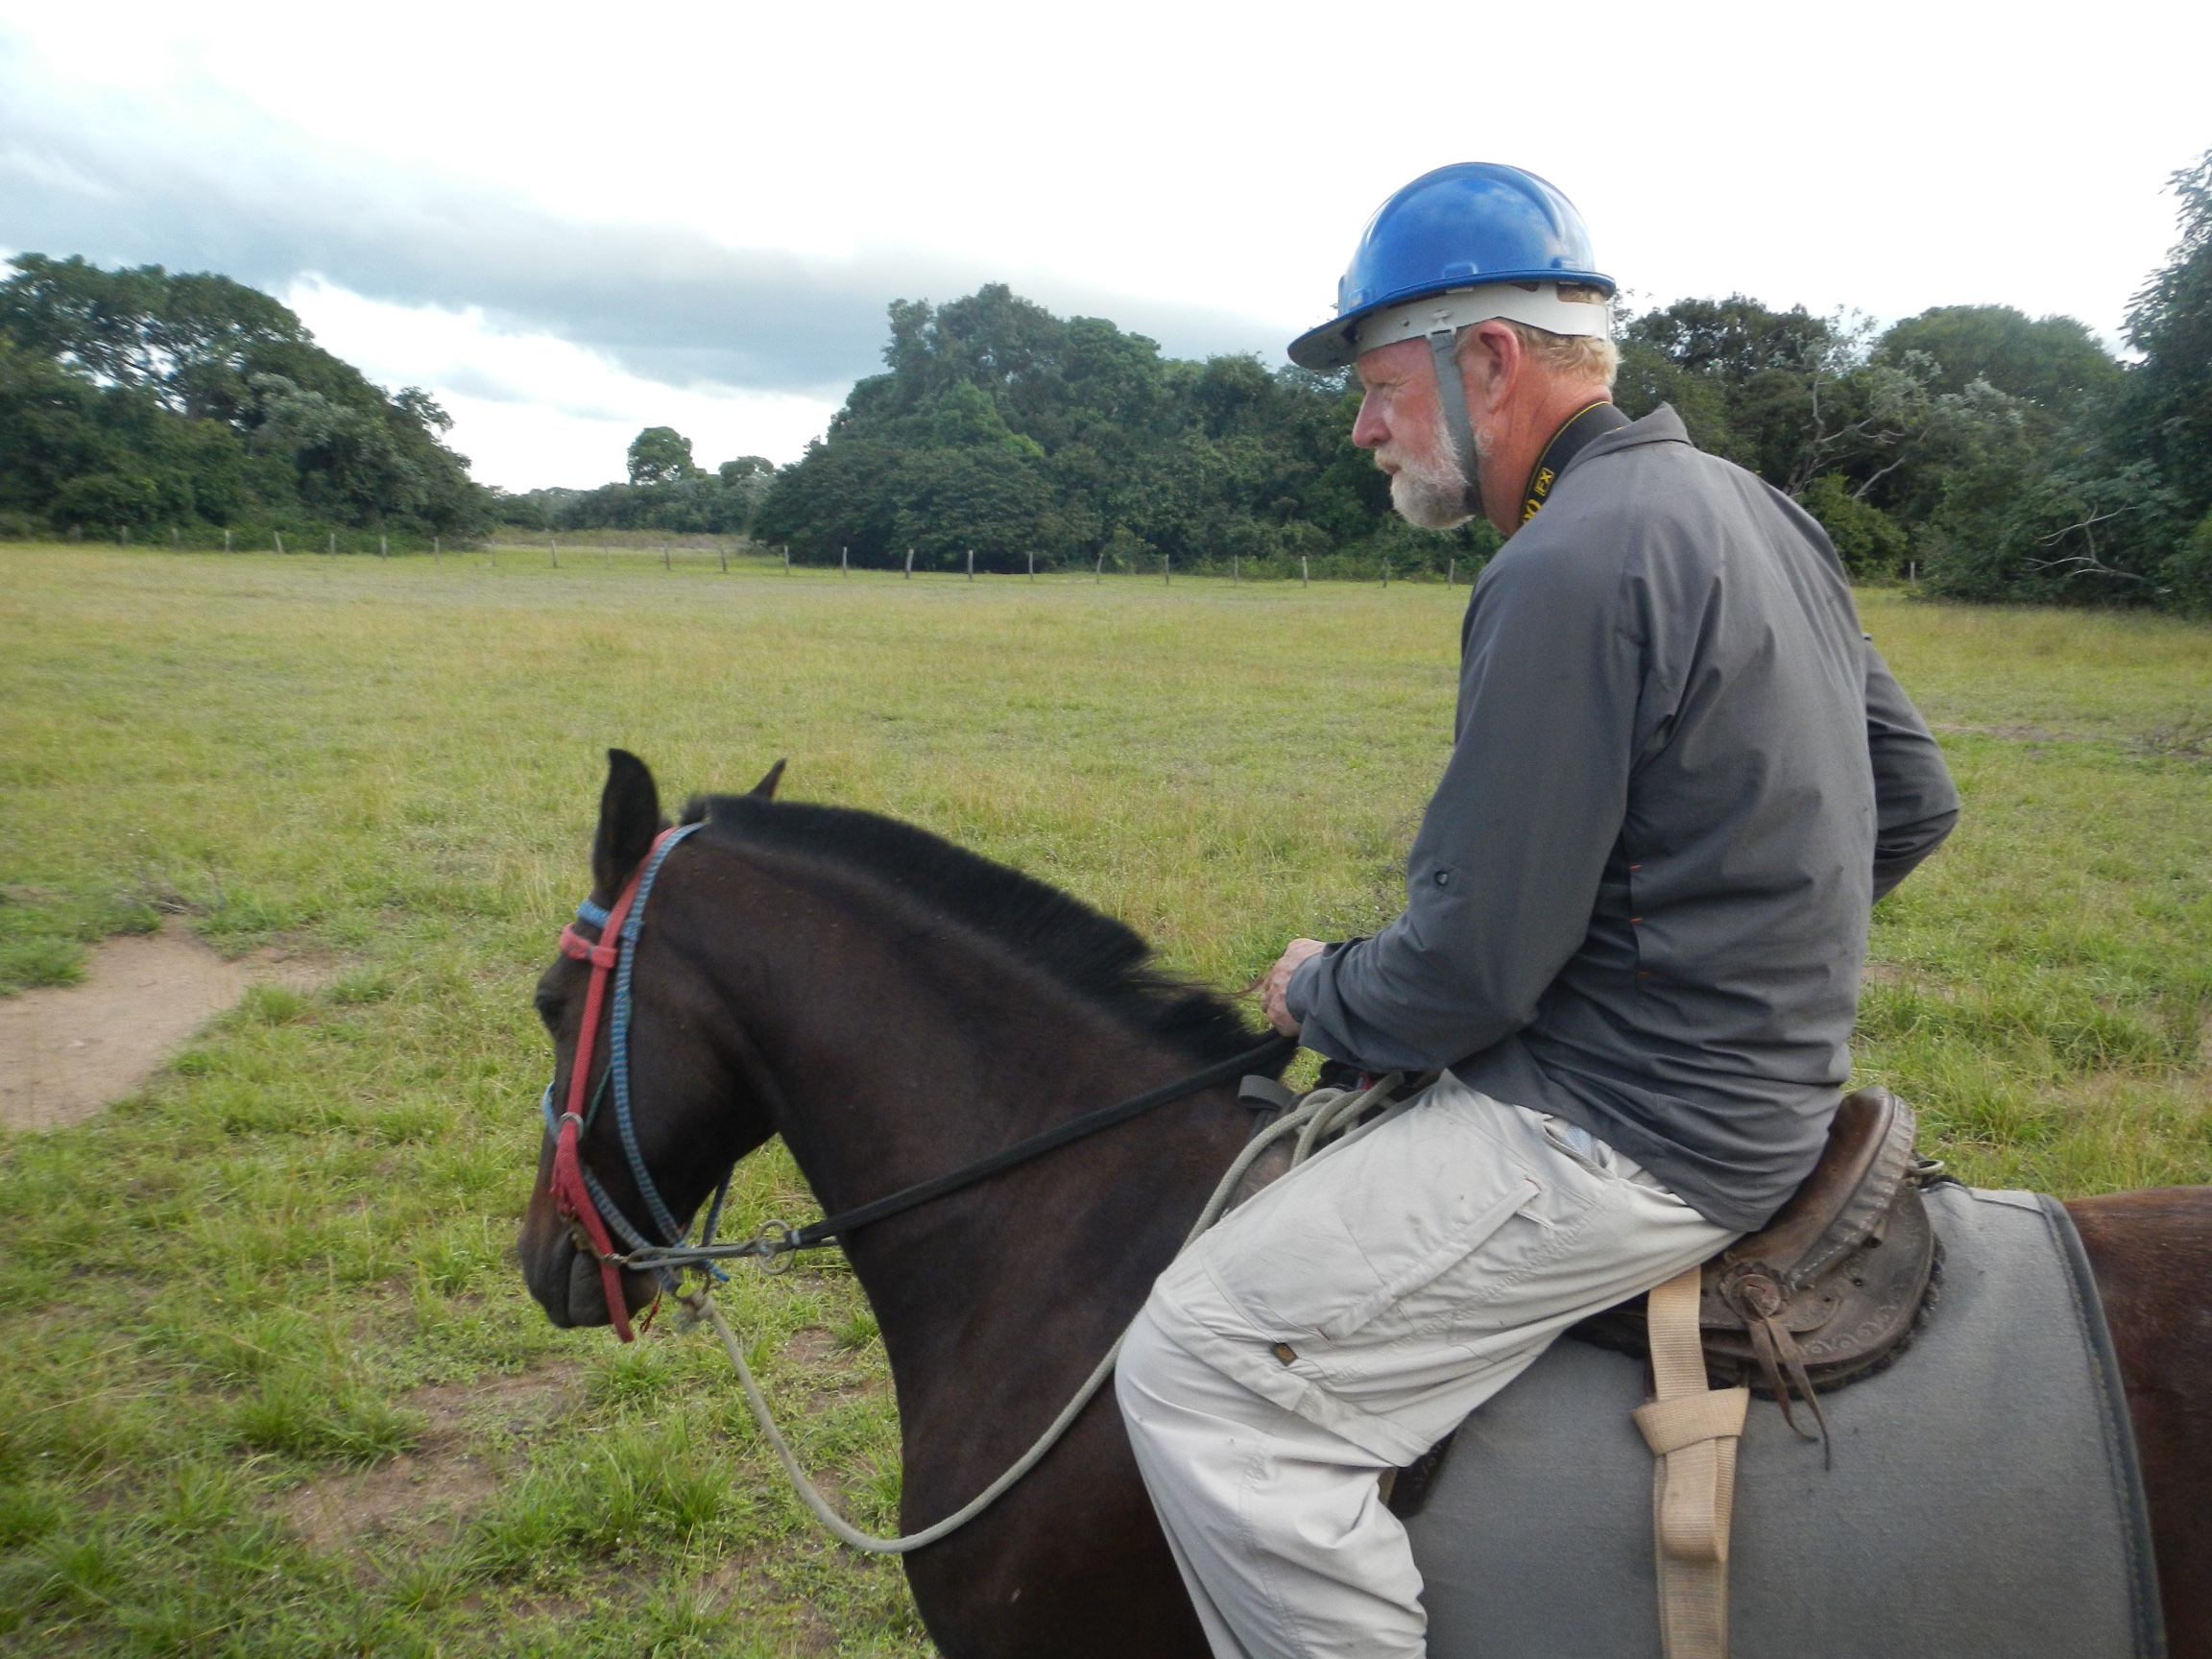  Tony horse riding, Pantanal, Brazil 